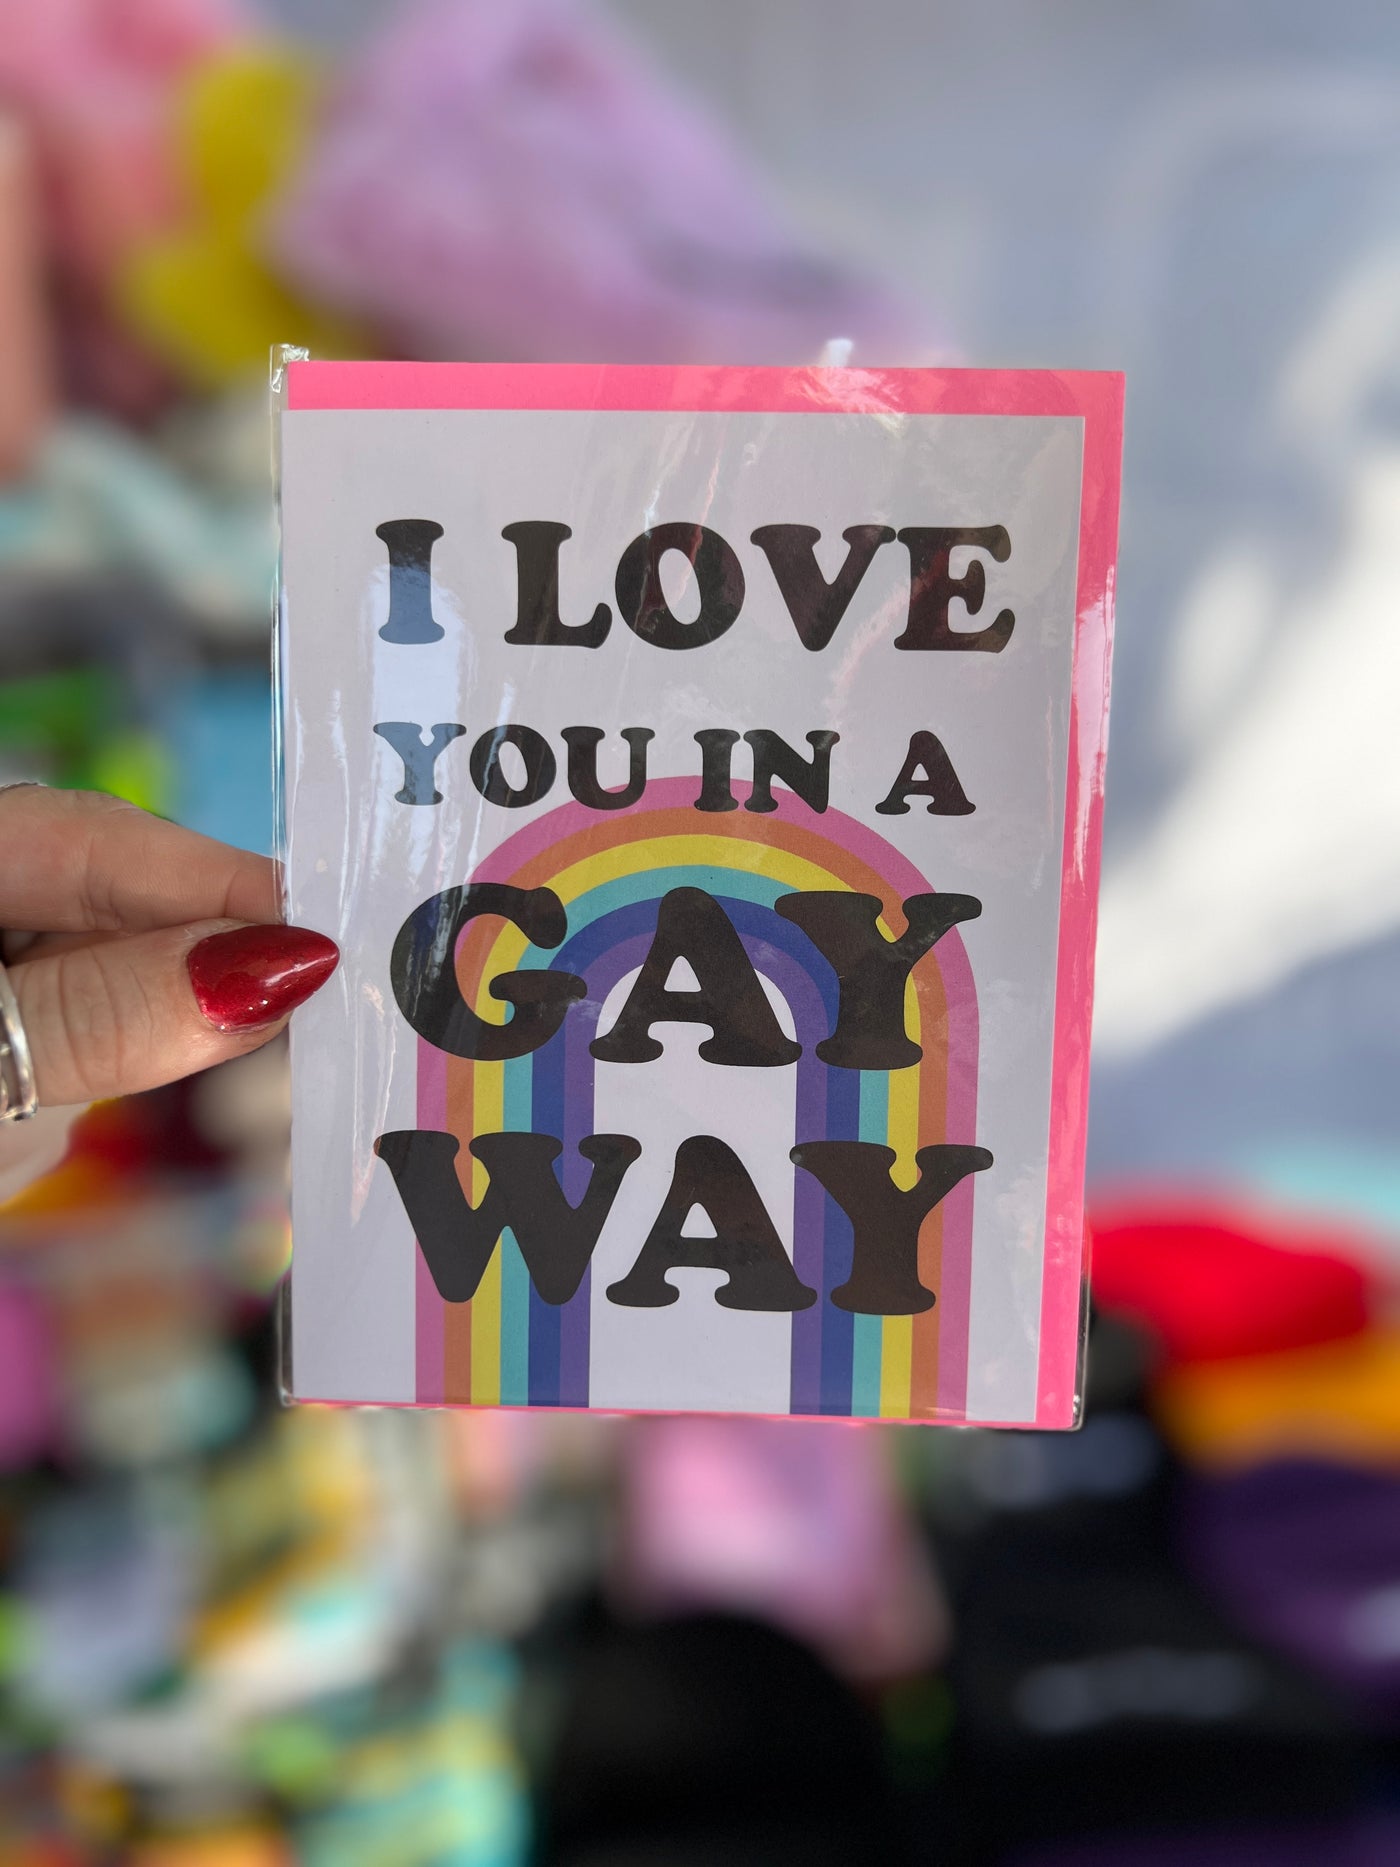 Gay Way Card